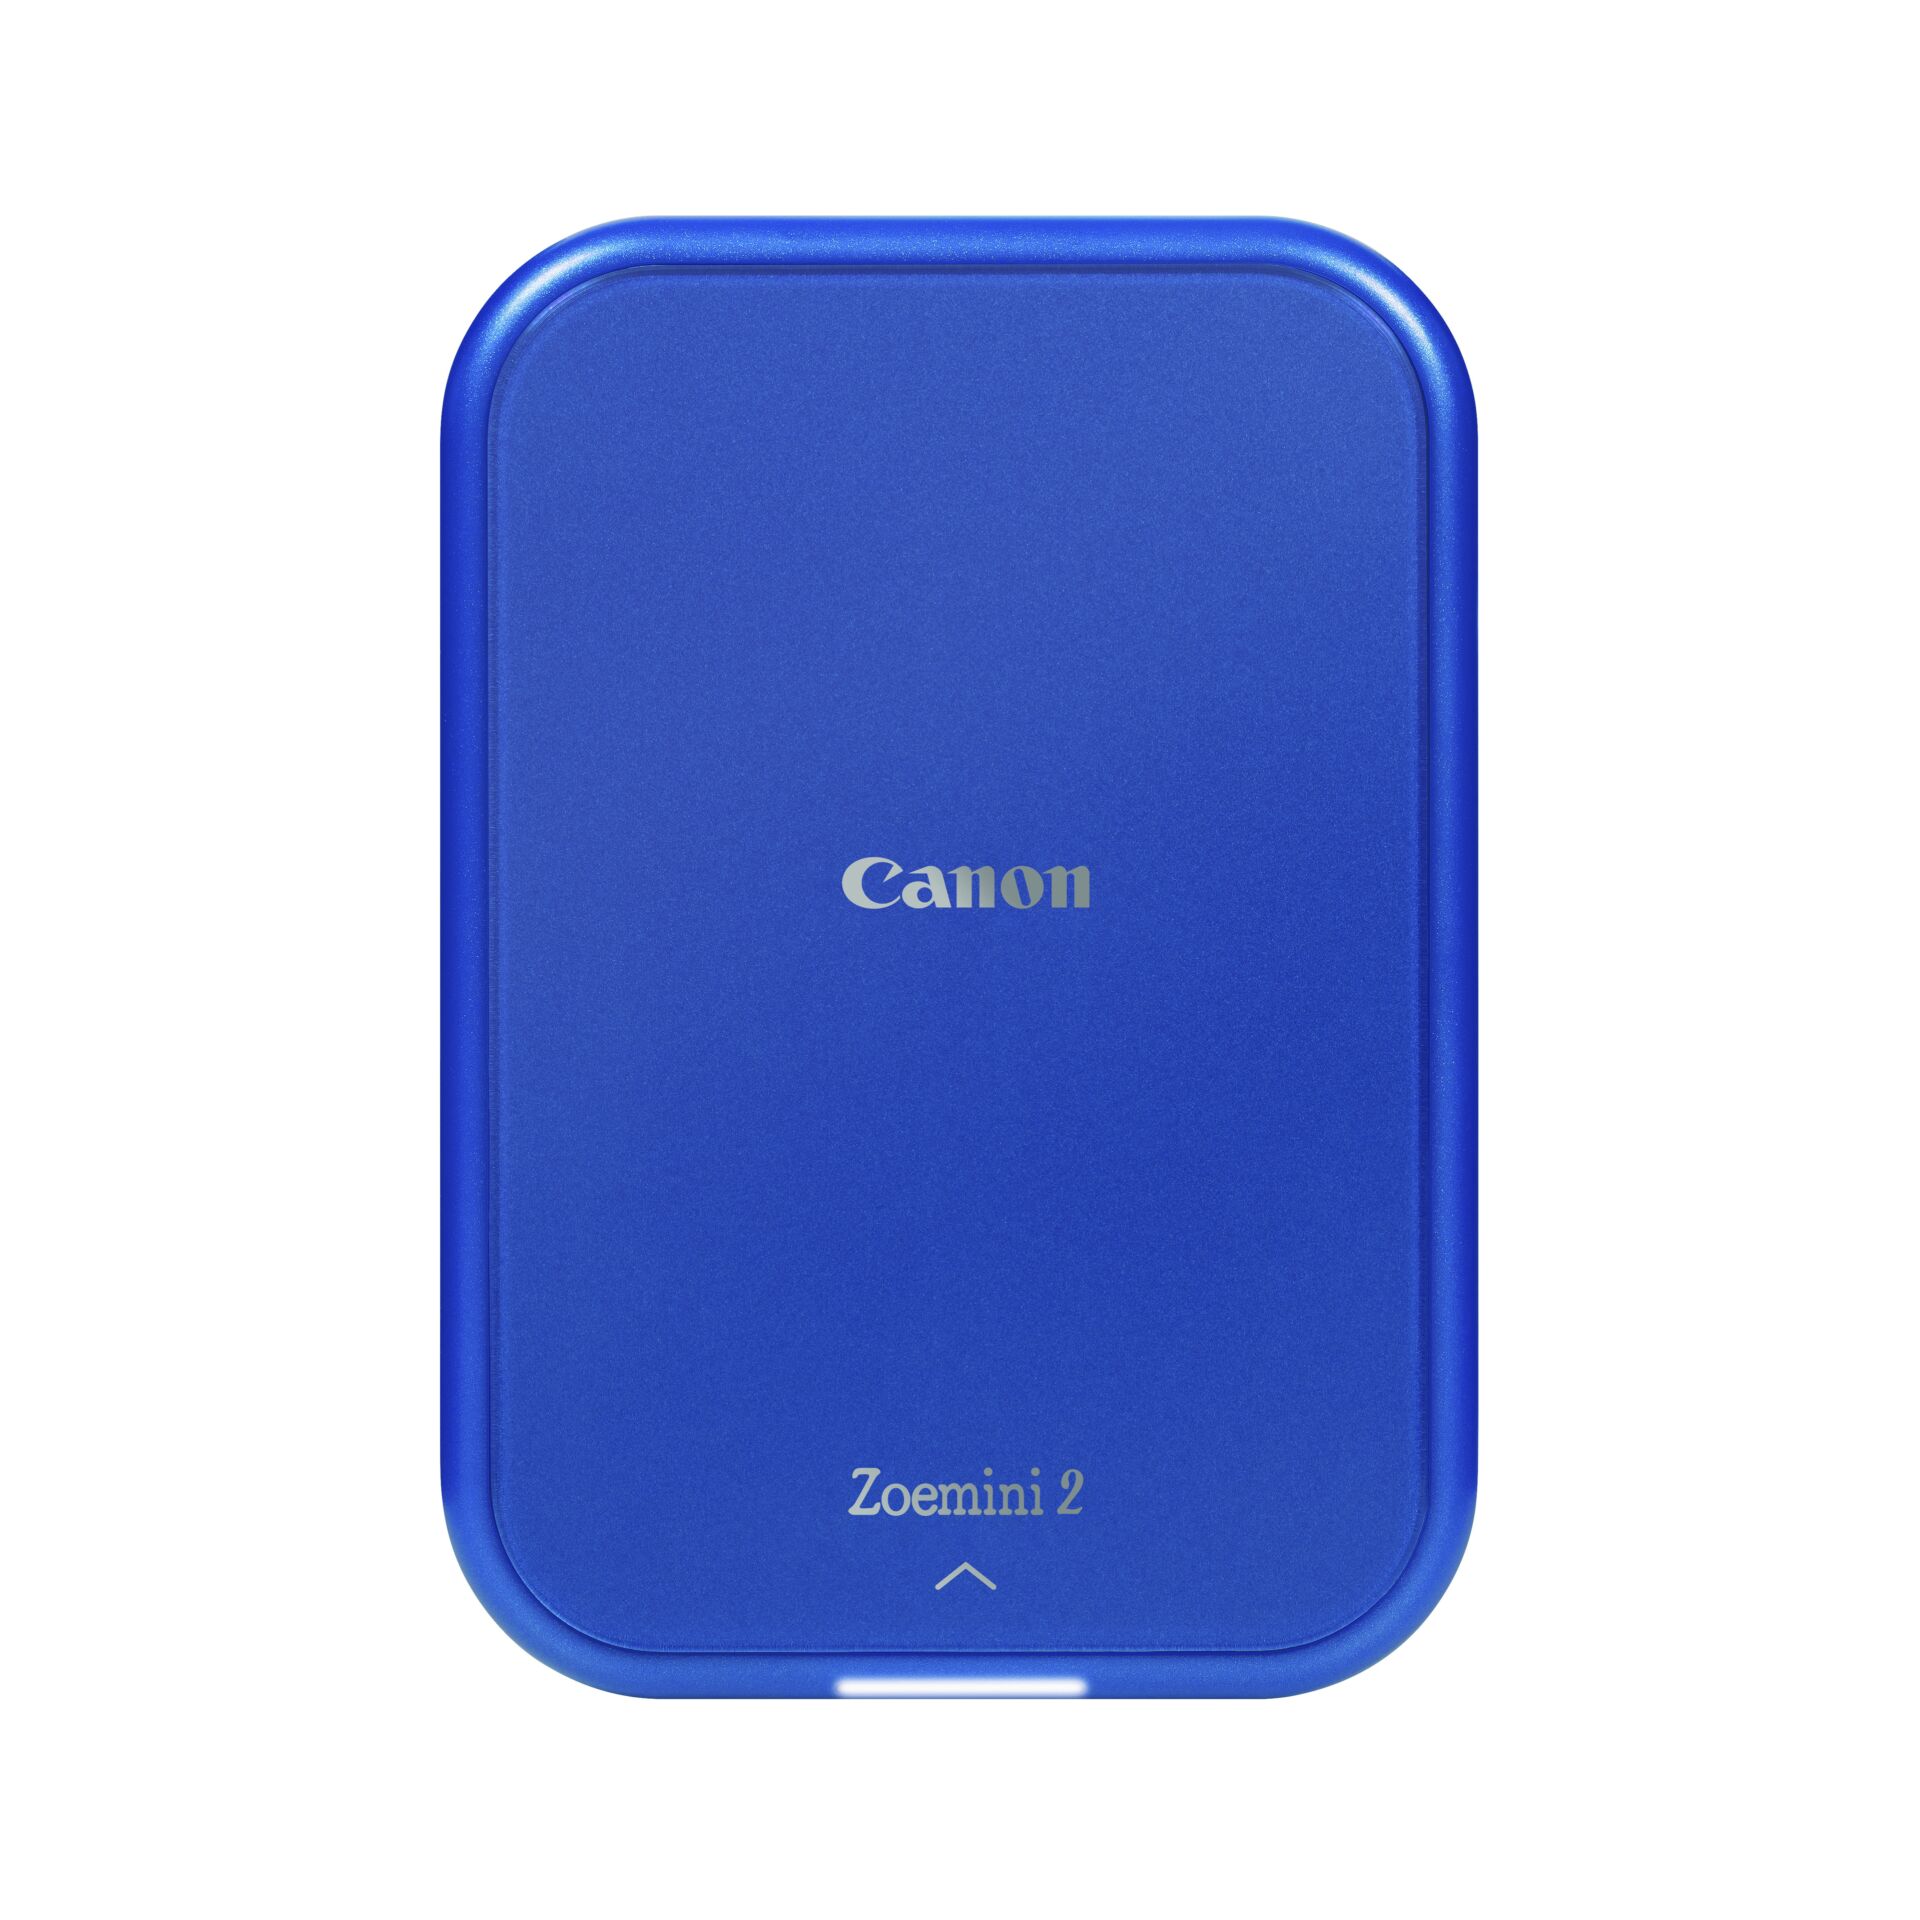 Canon Zoemini 2 Fotodrucker ZINK (Zero ink) 313 x 500 DPI 2 x 3 (5x7.6 cm)